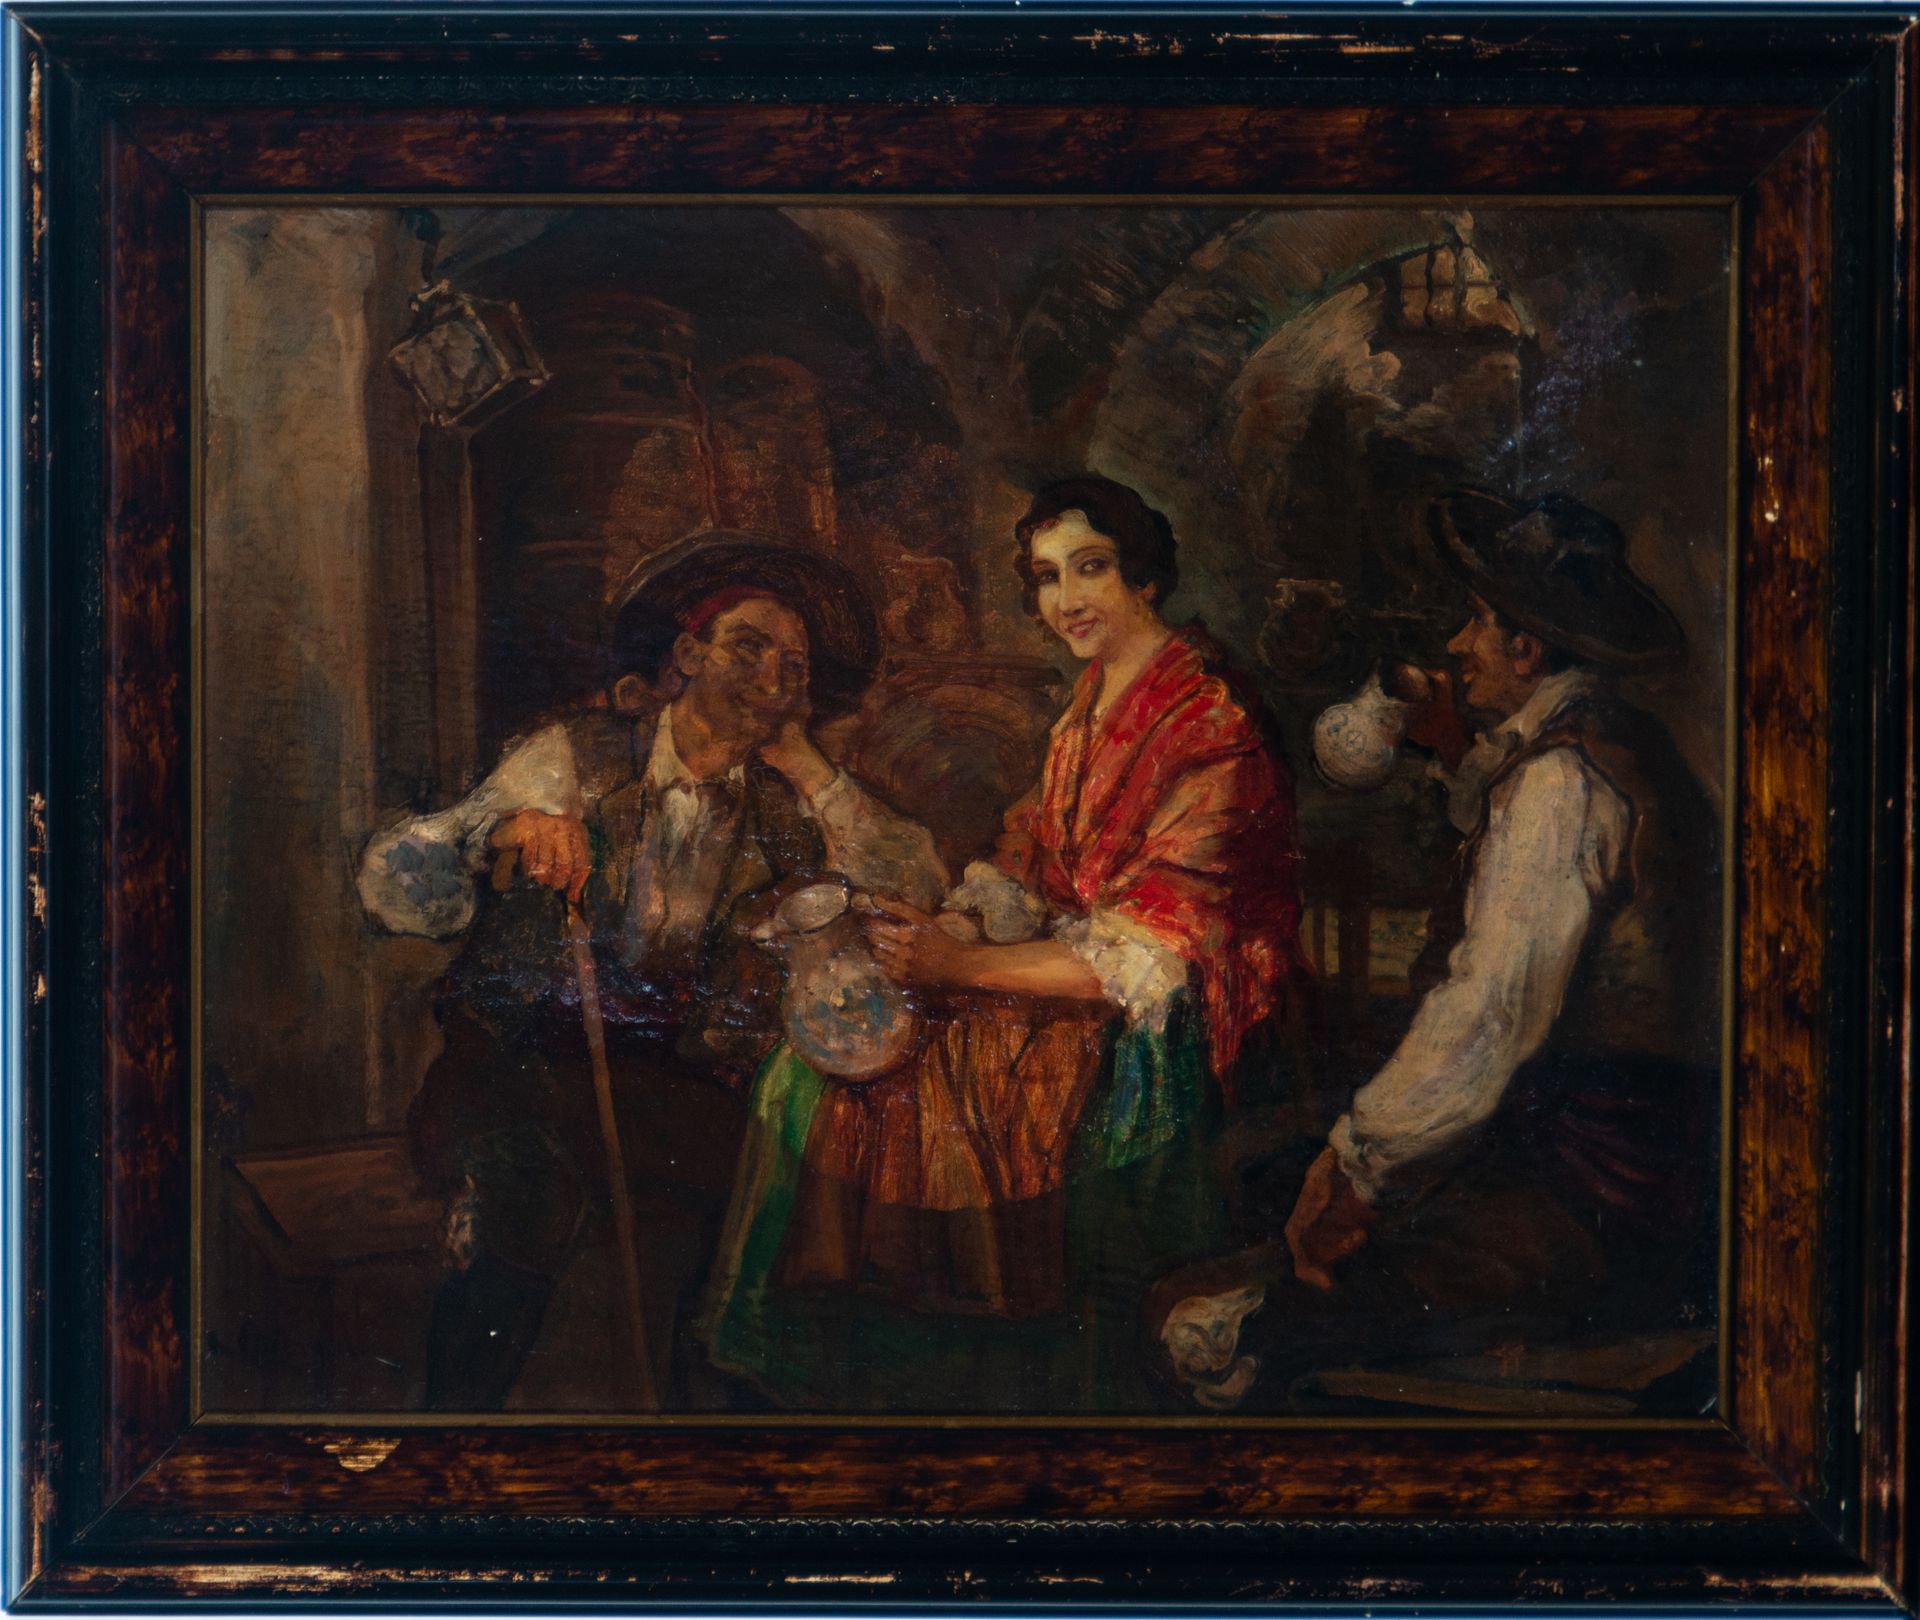 Pair of Tavern Scenes, 19th century Spanish school, signed